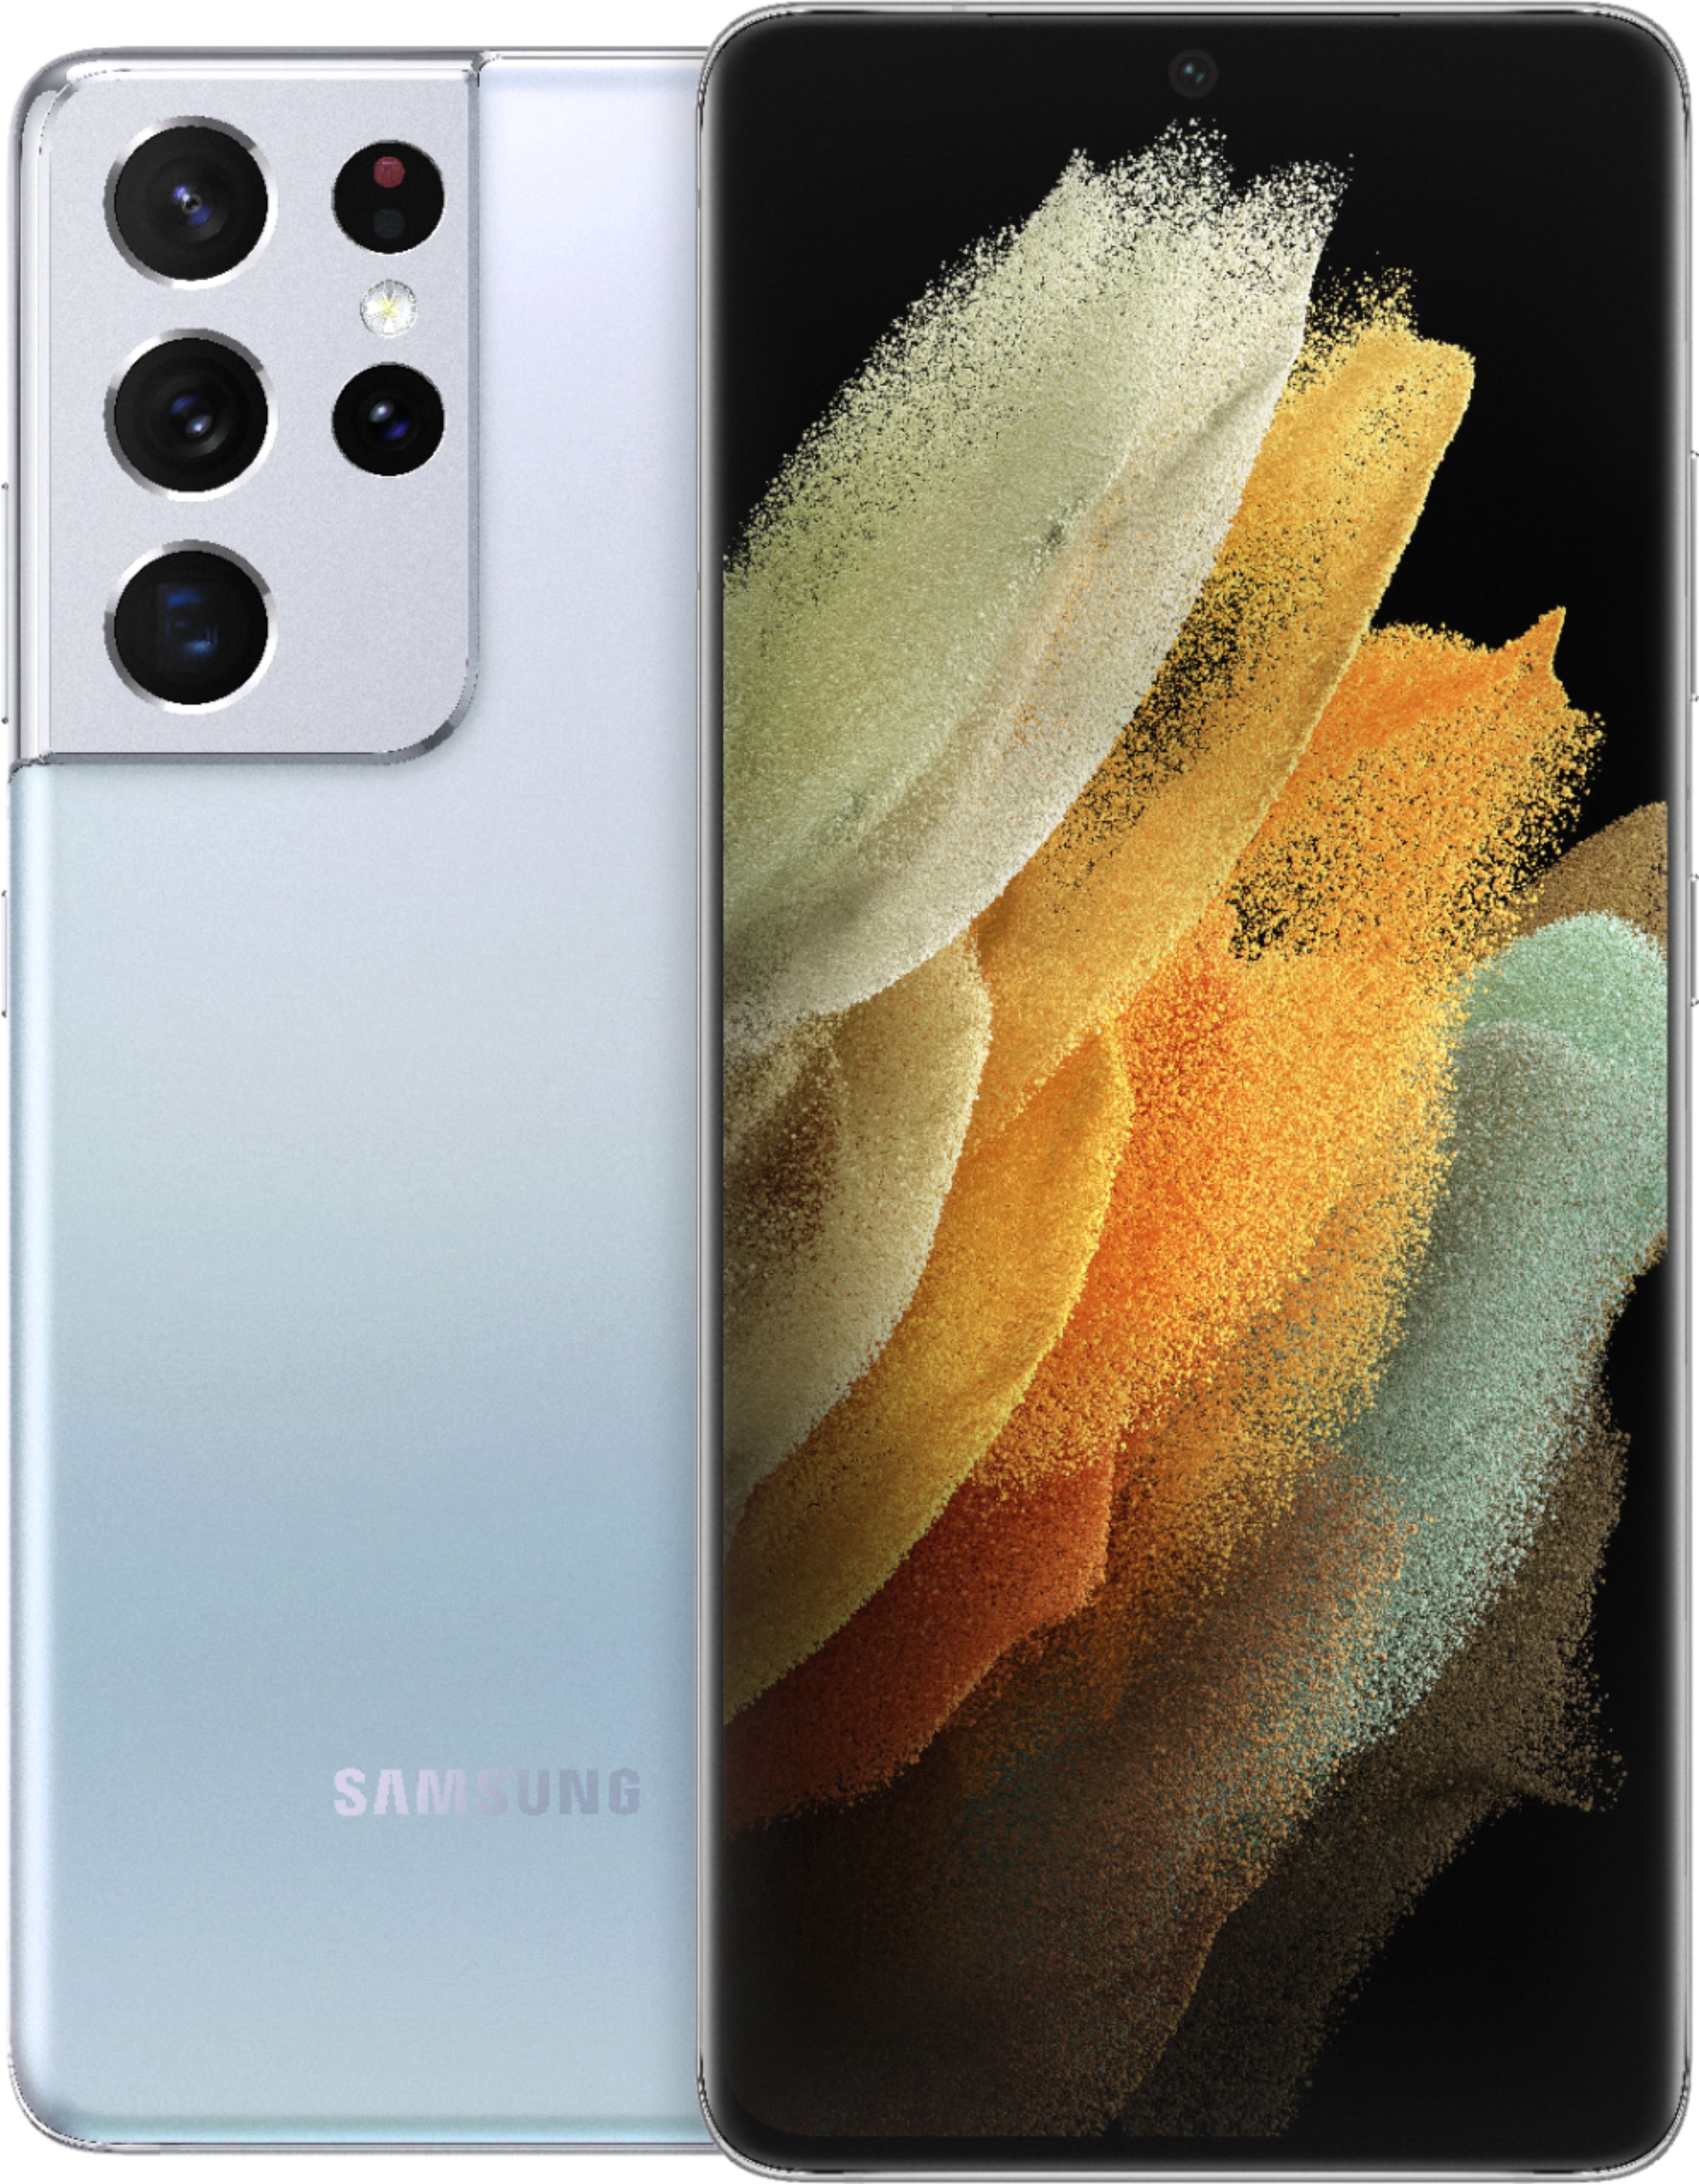 Dimprice  Samsung Galaxy S21 Ultra 5G (12GB + 256GB, Dual Sim) - Phantom  Silver